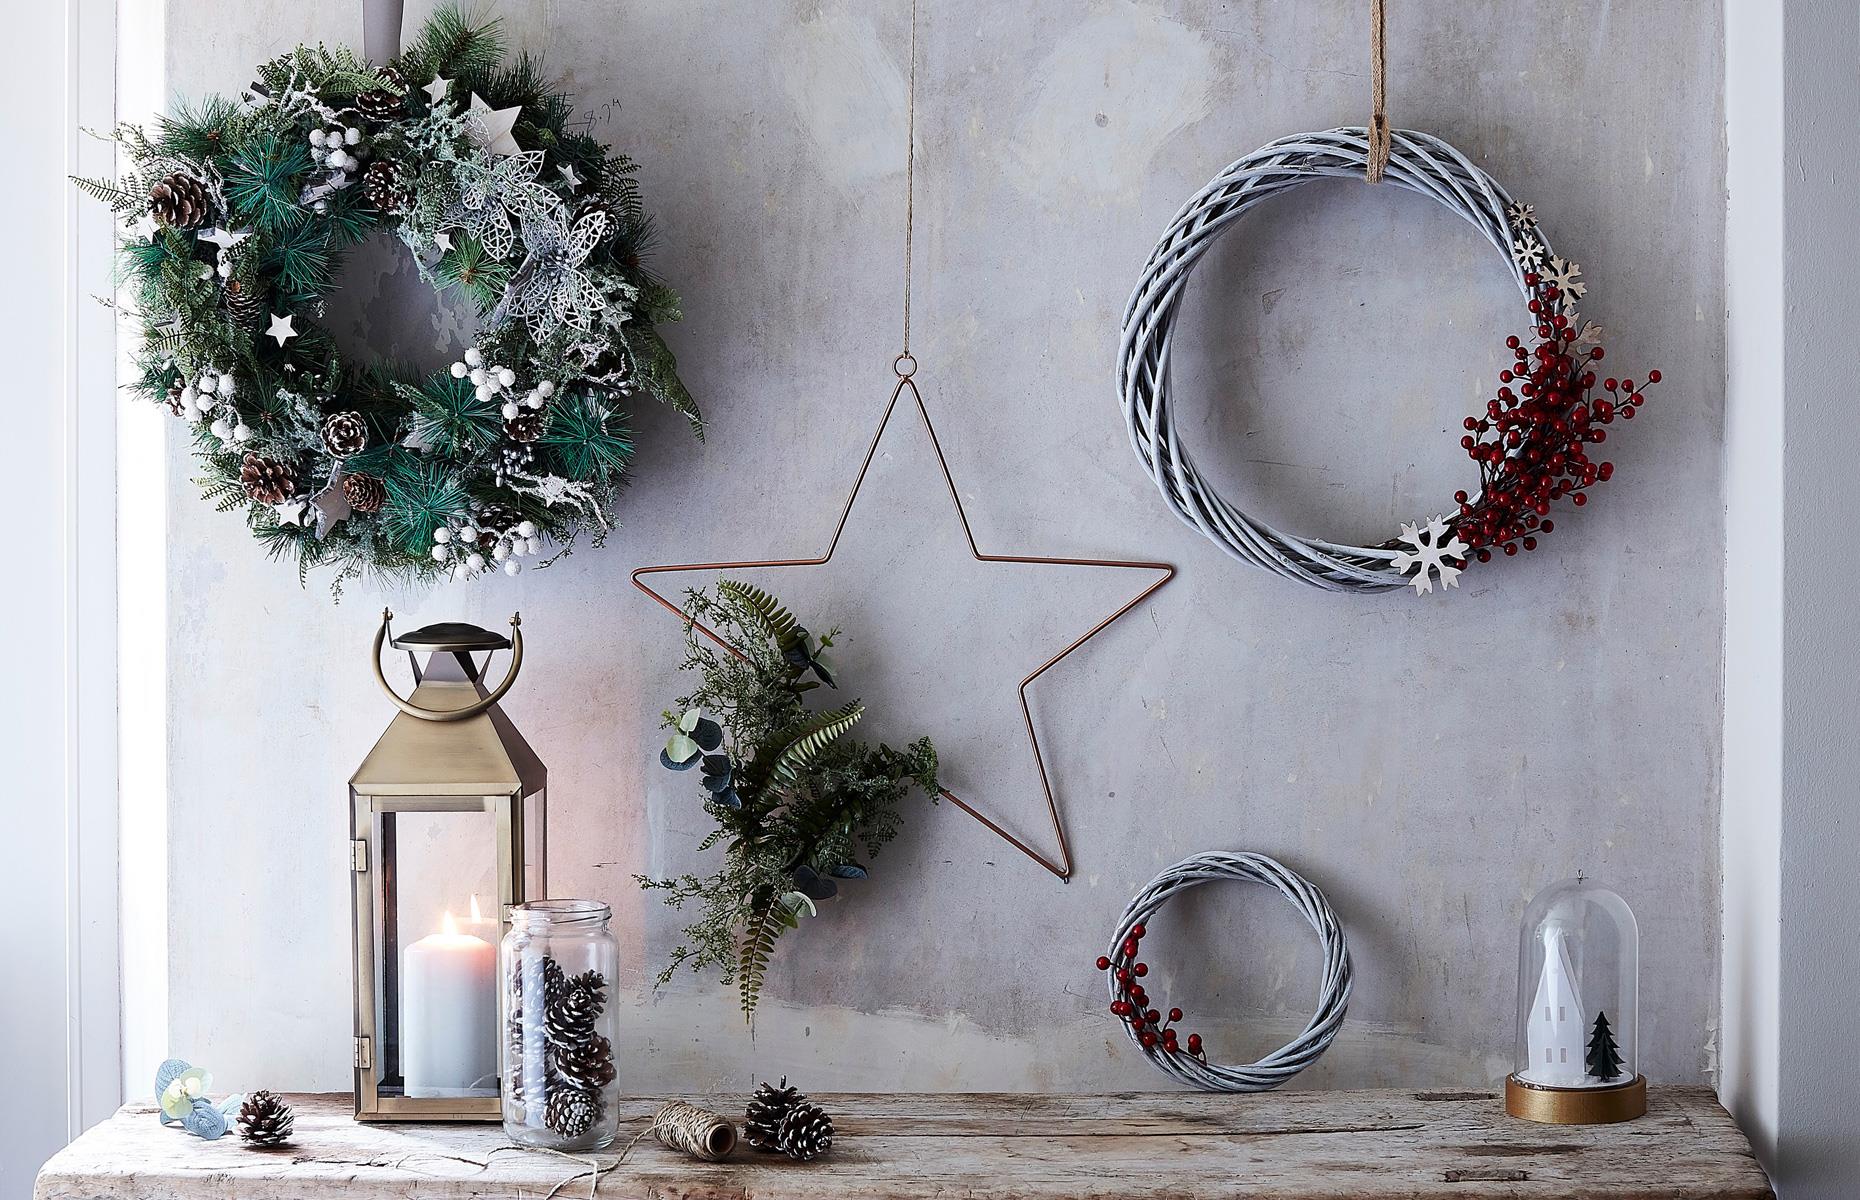 Create a wreath display